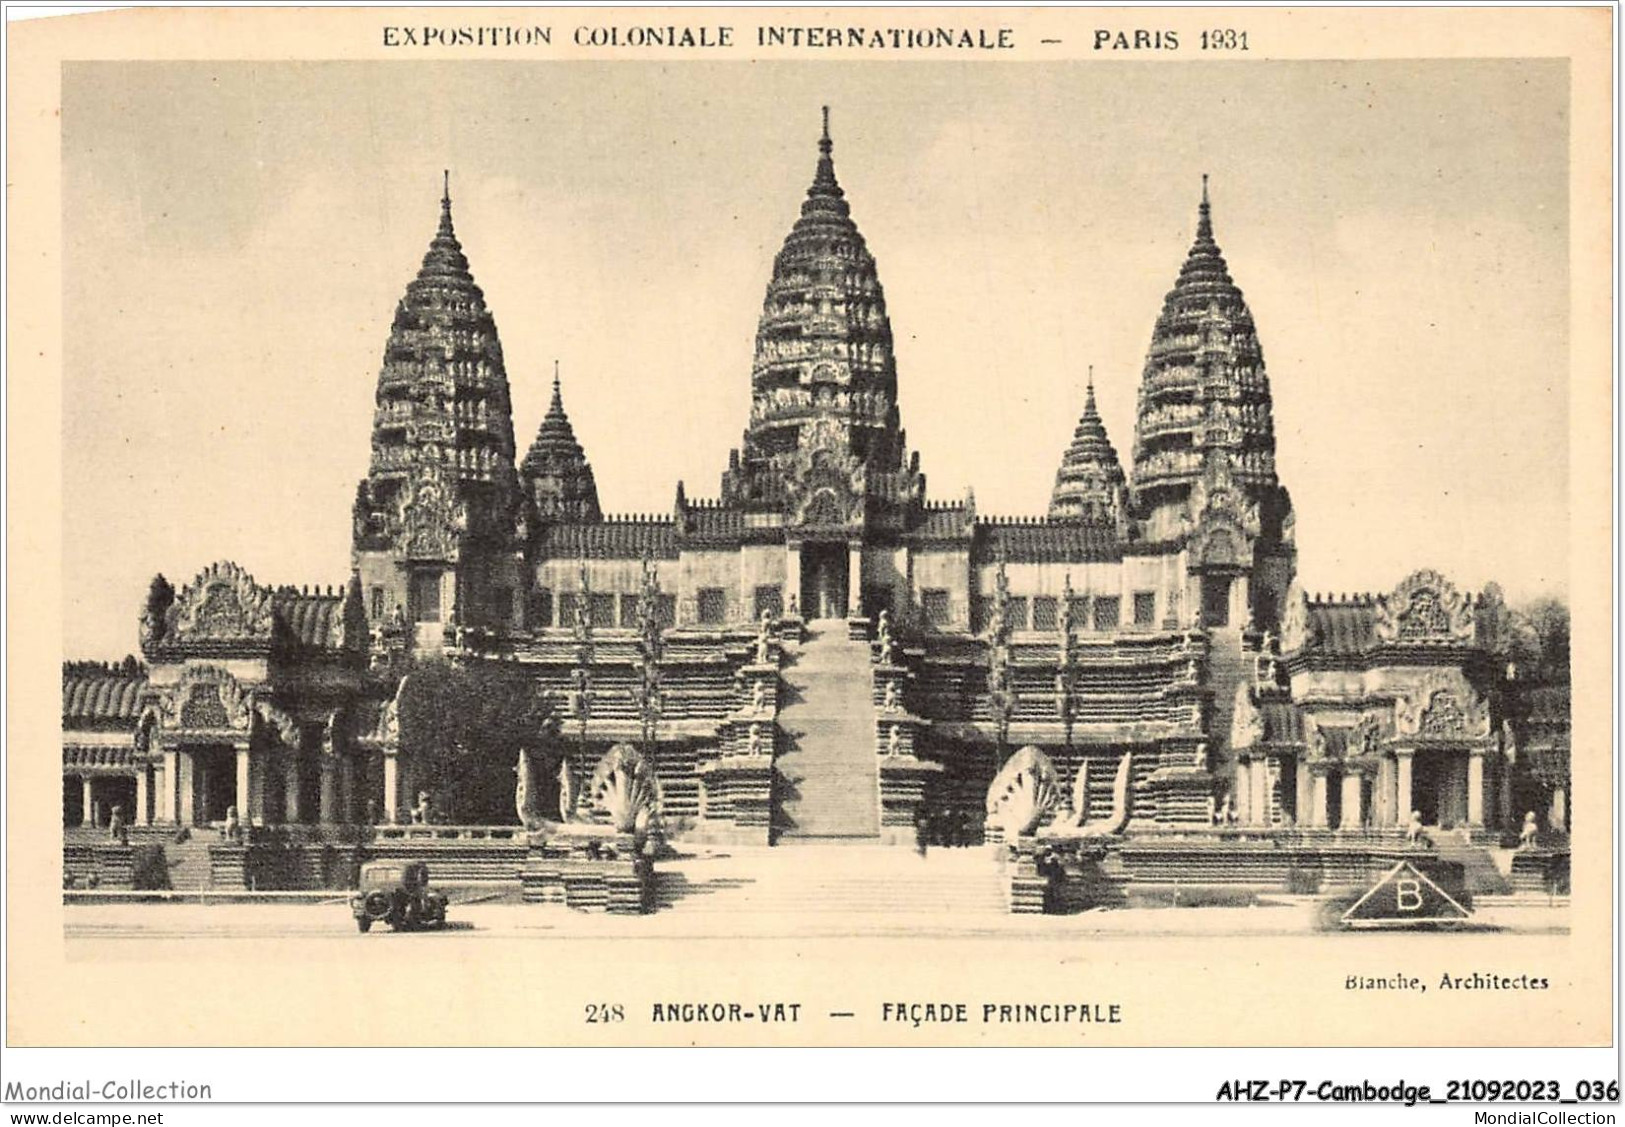 AHZP7-CAMBODGE-0614 - EXPOSITION COLONIALE INTERNATIONALE - PARIS 1931 - ANGKOR-VAT - FACADE PRINCIPALE - Cambodja